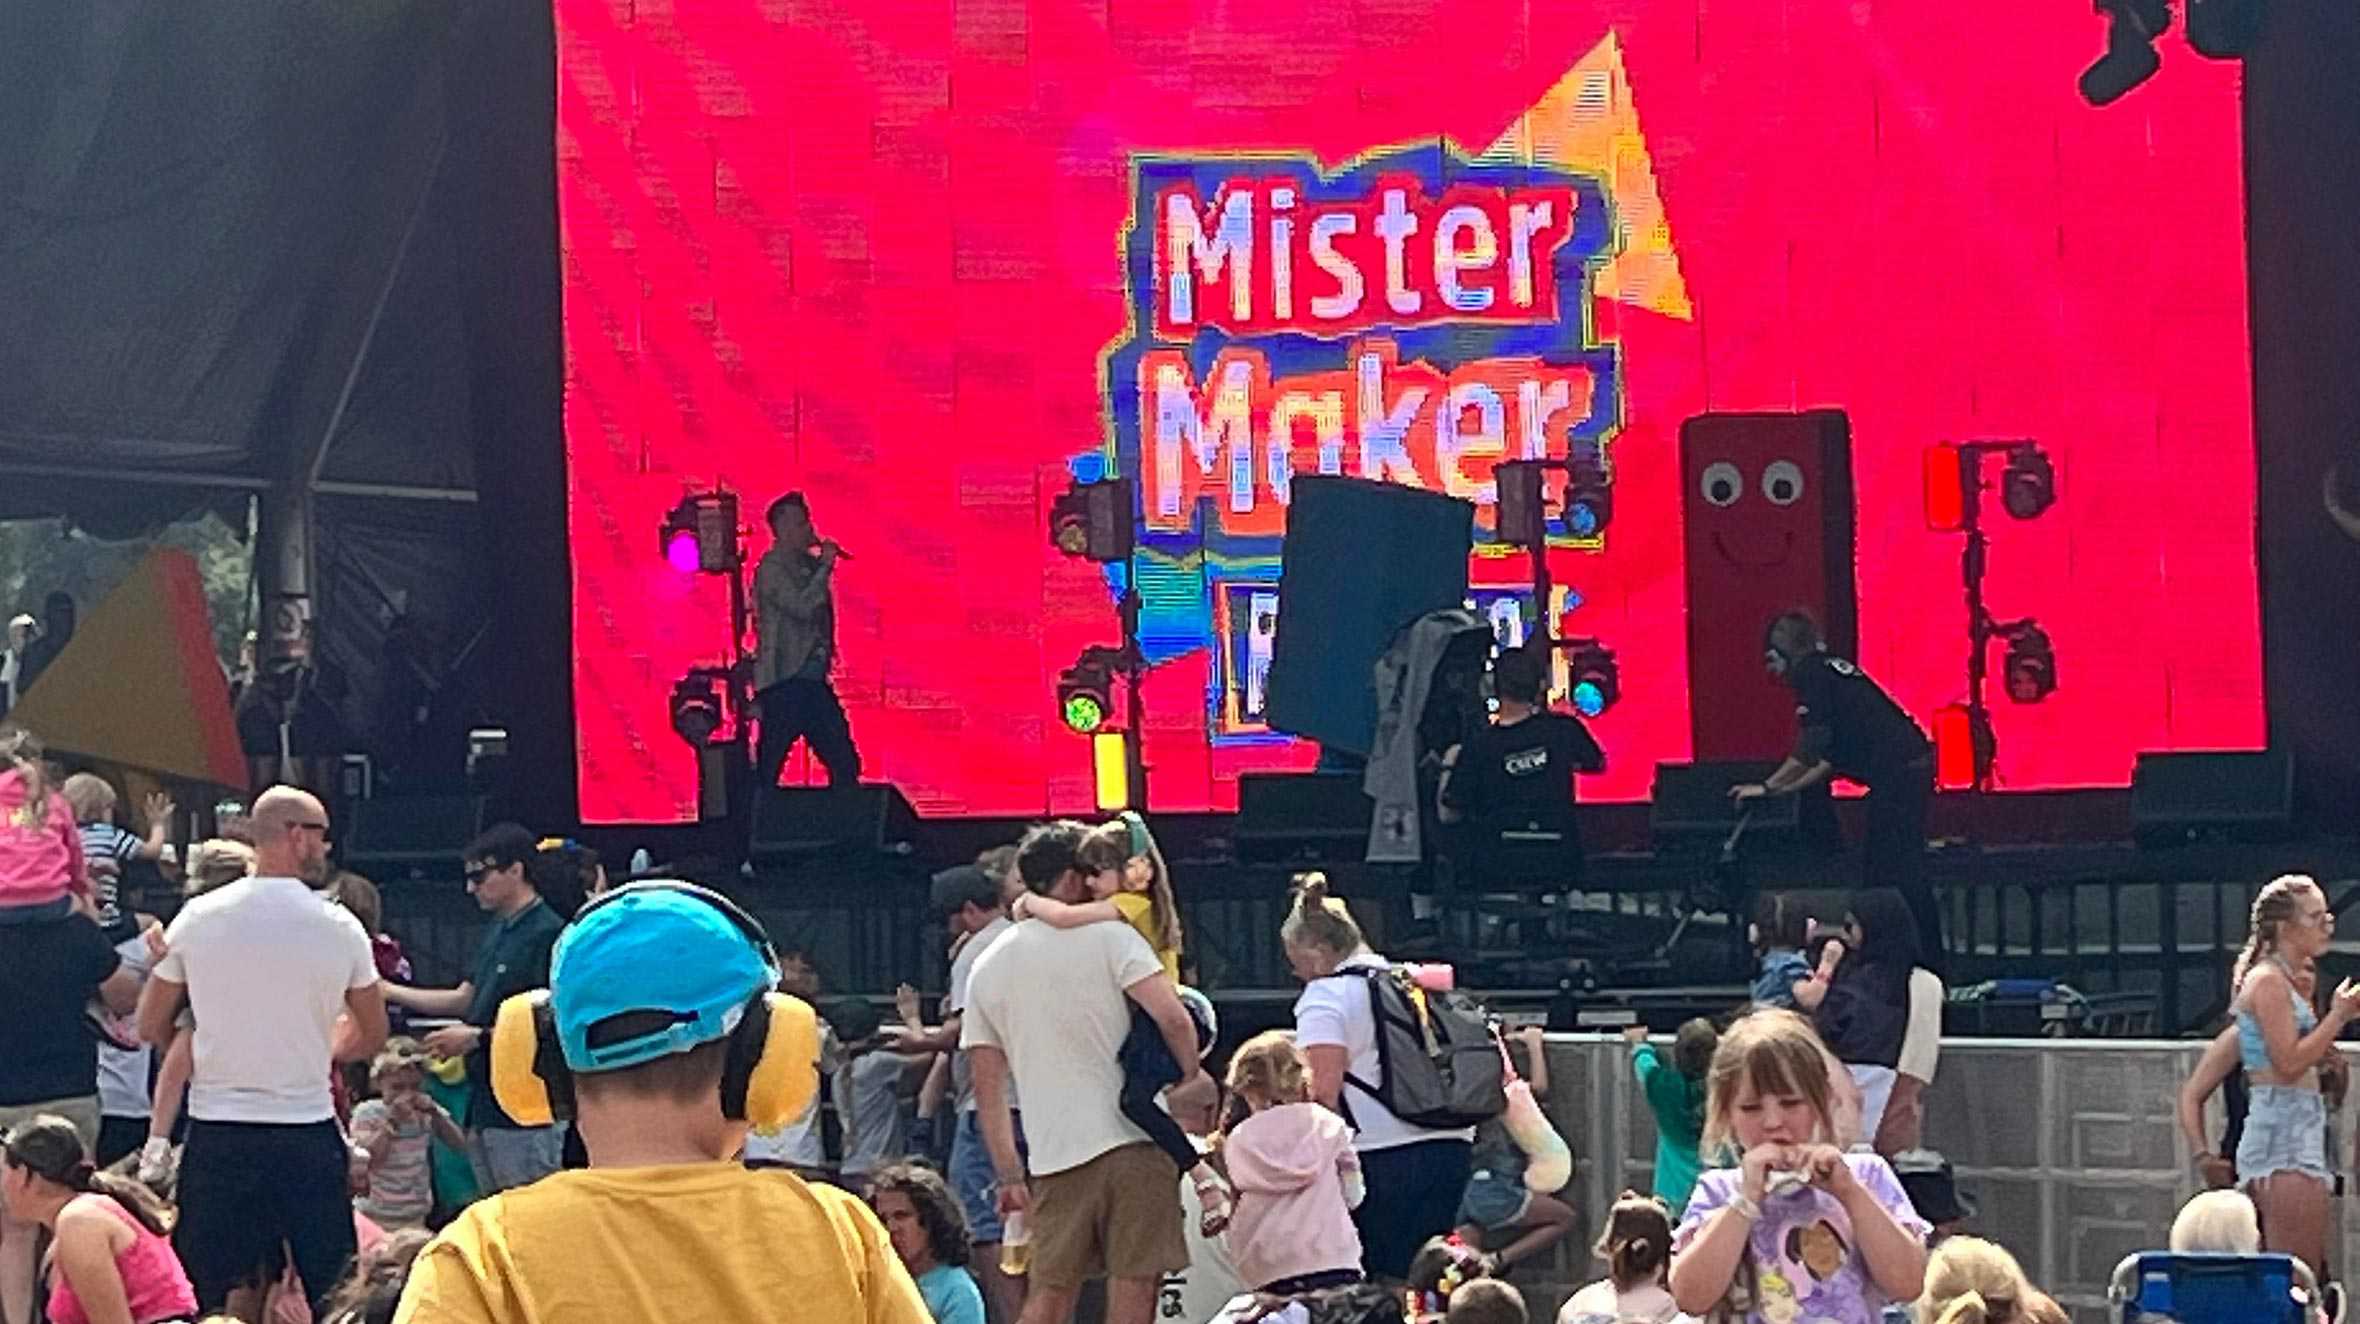 Mister Maker performing at Camp Bestival.